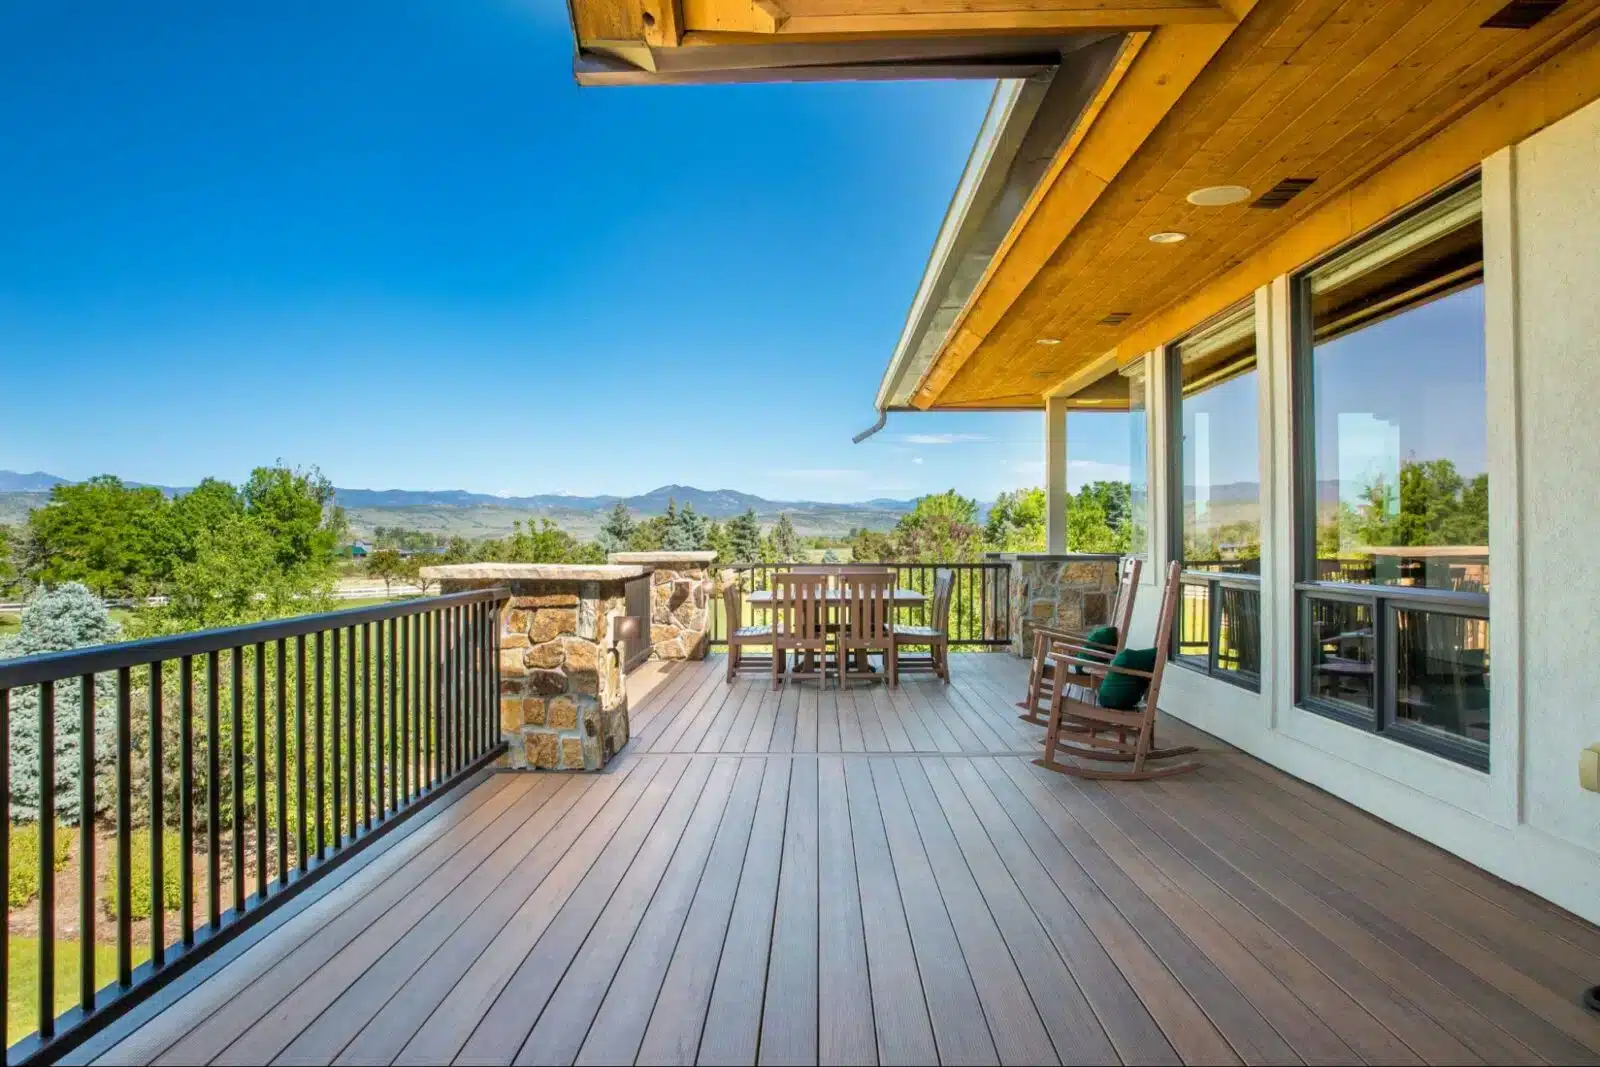 A TimberTech deck, the best deck materials for mountain homes